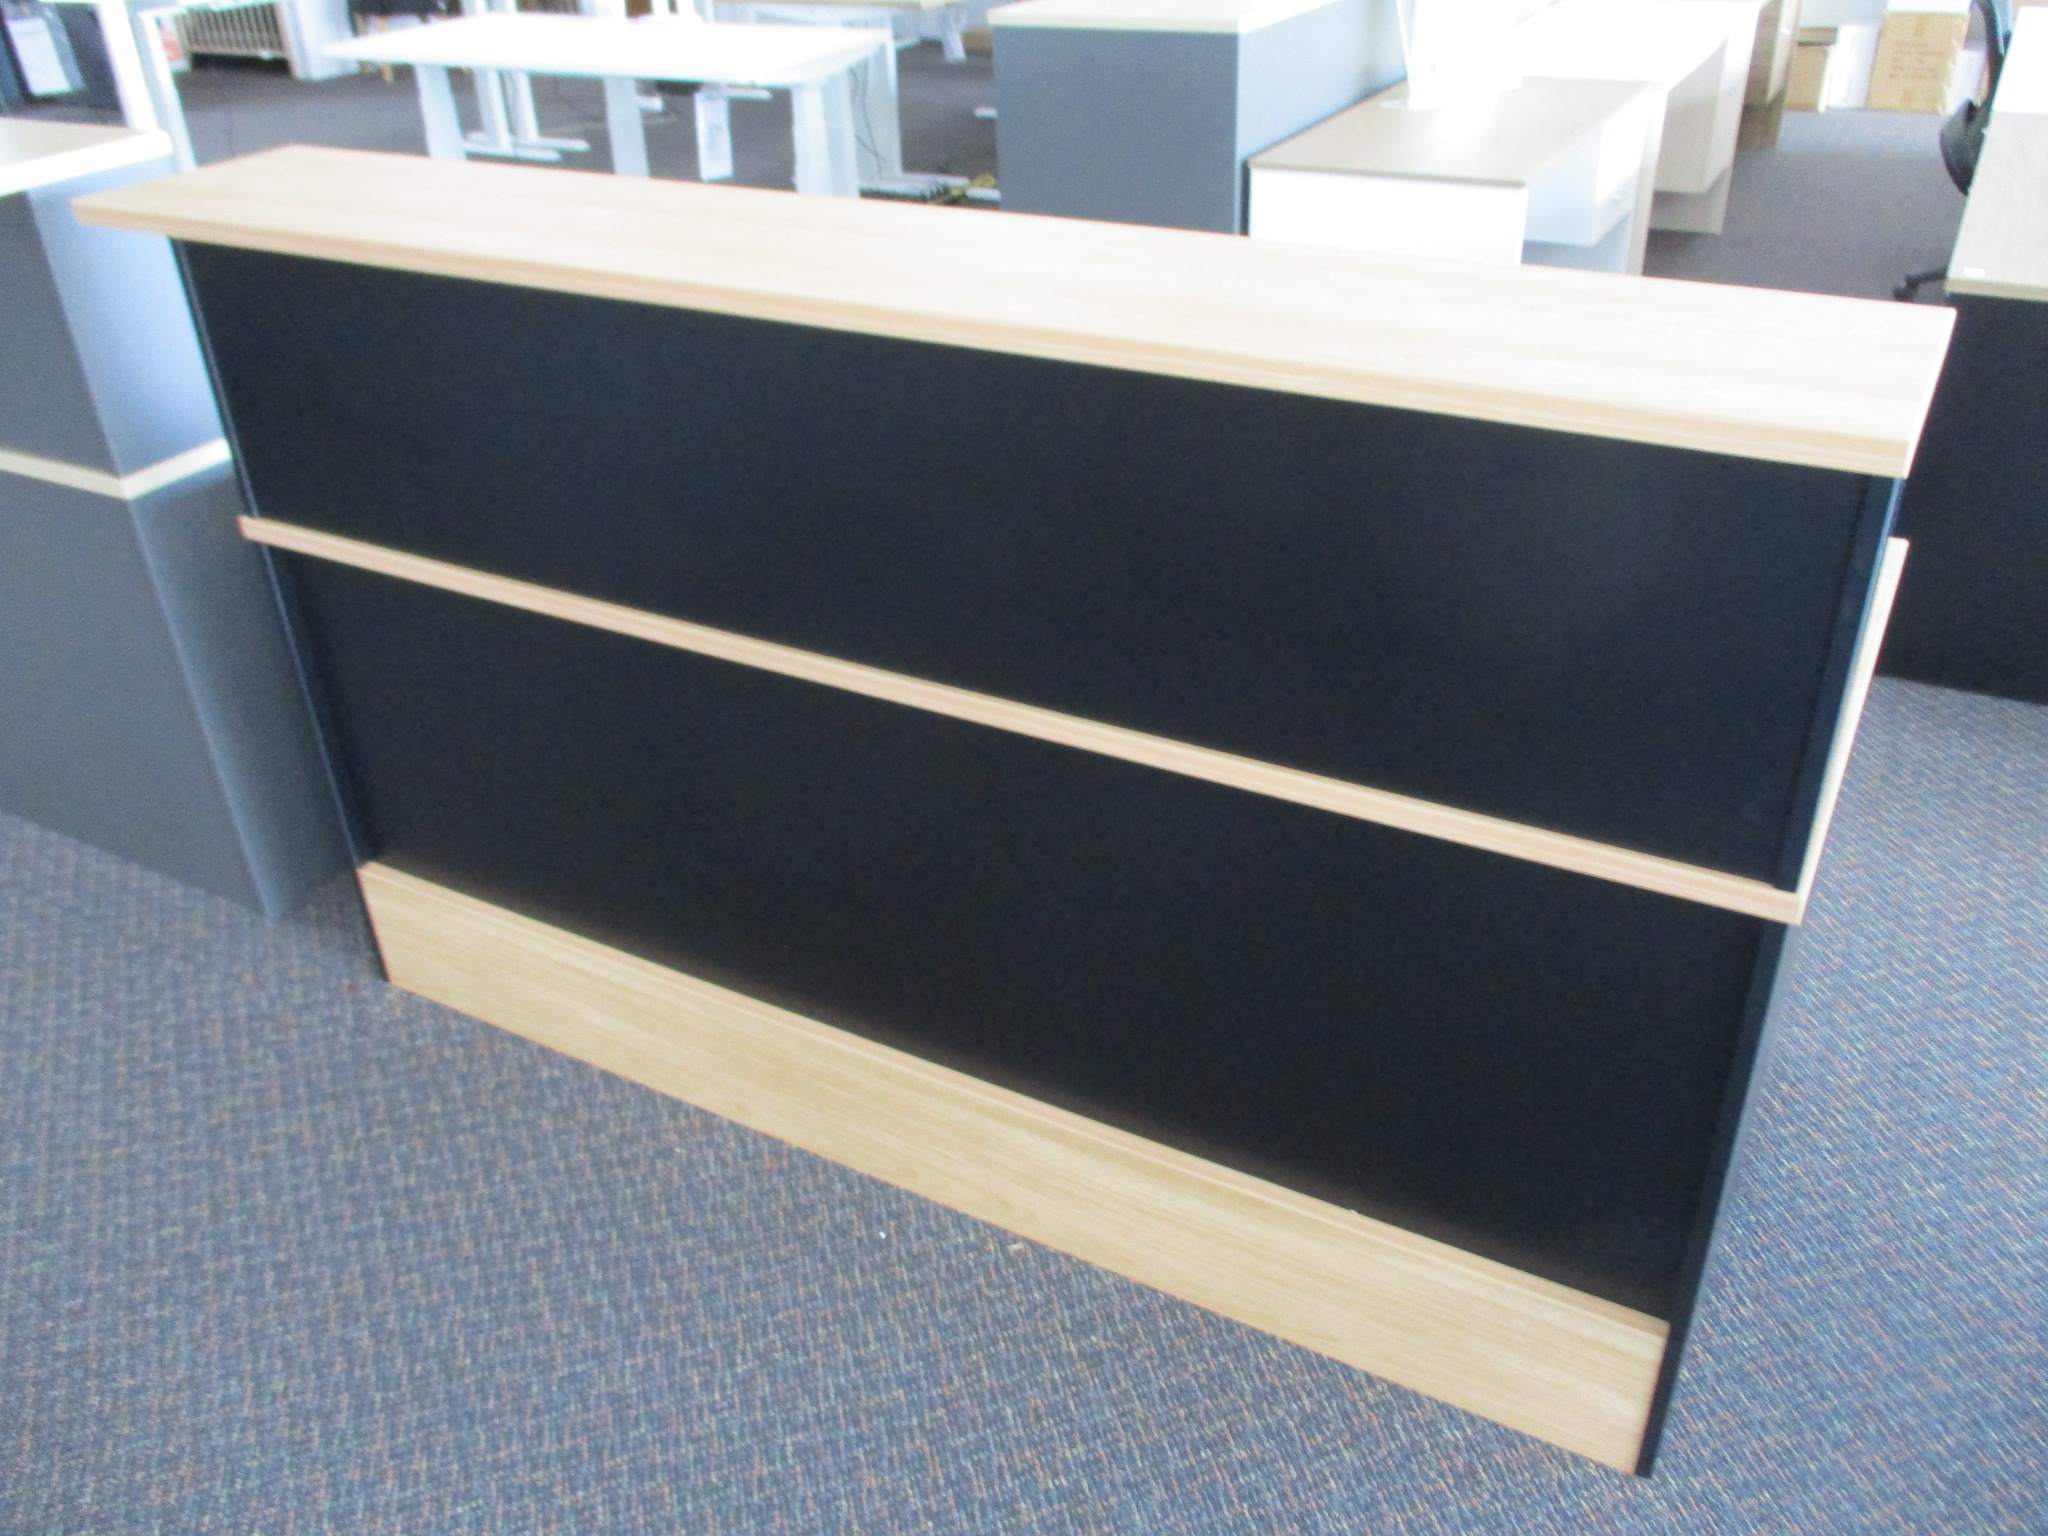 New Elegant Oak and Black Reception Counter 1800×750 $990